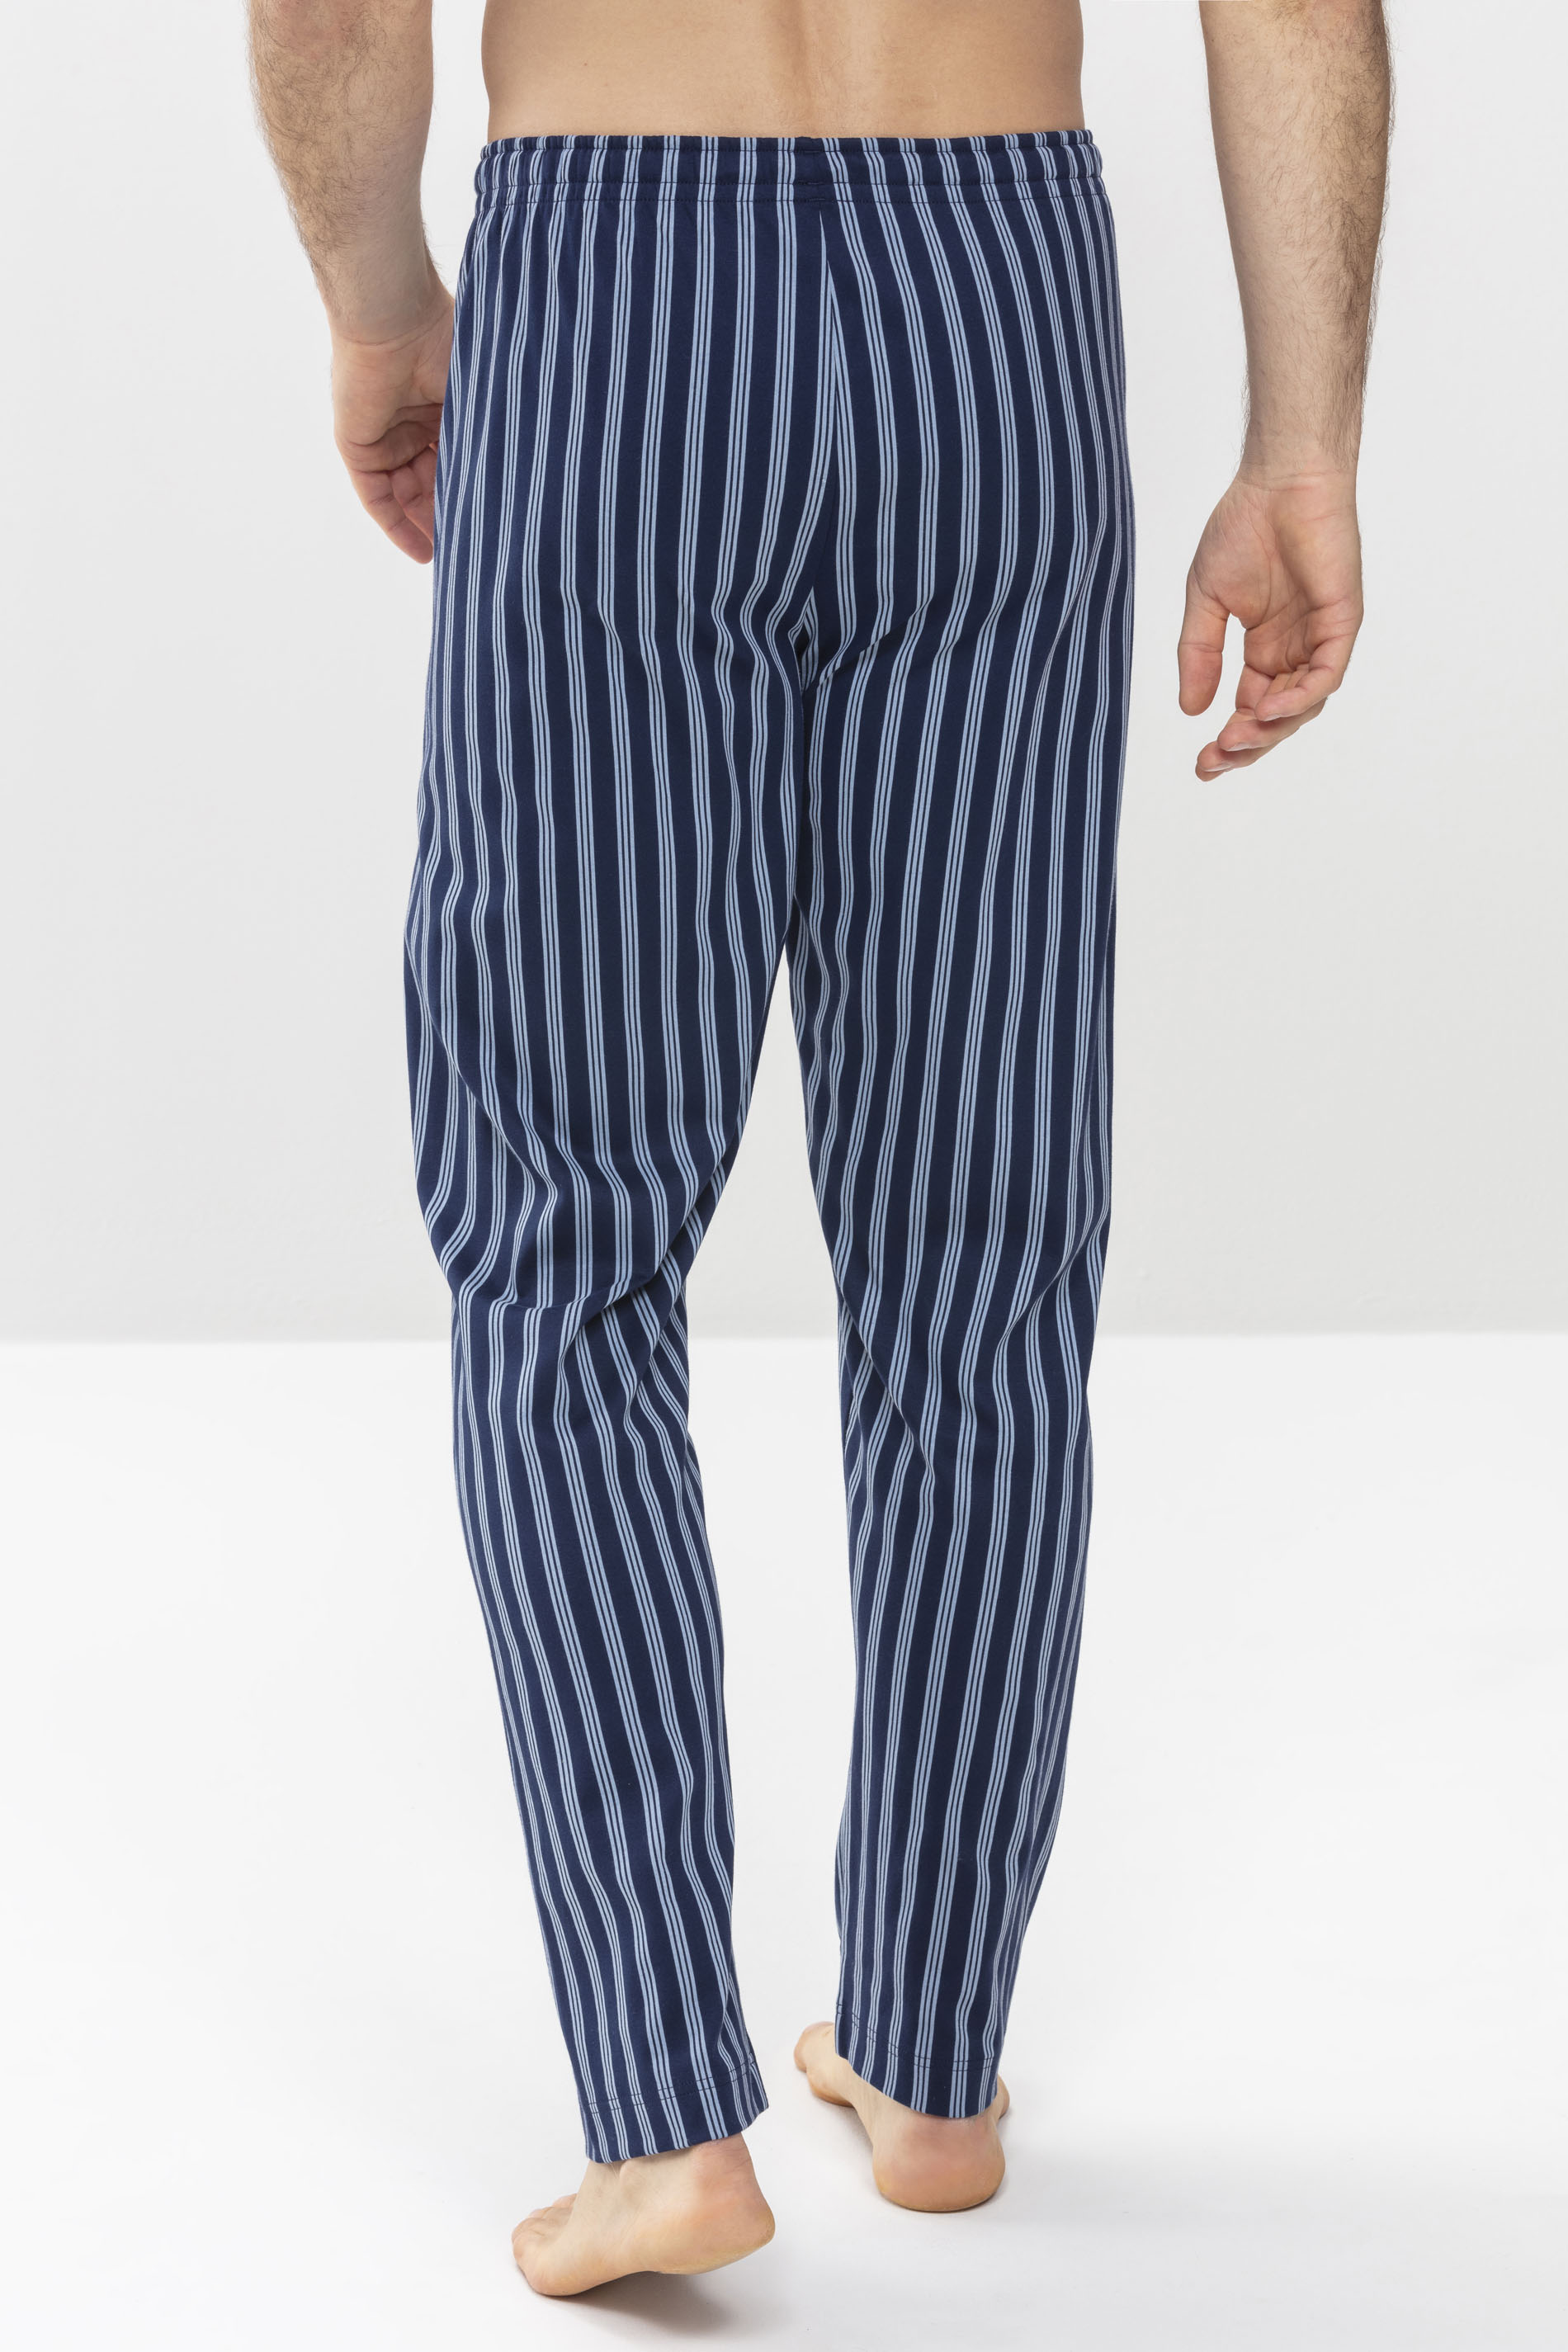 Long trousers Neptune Serie Cranbourne Rear View | mey®